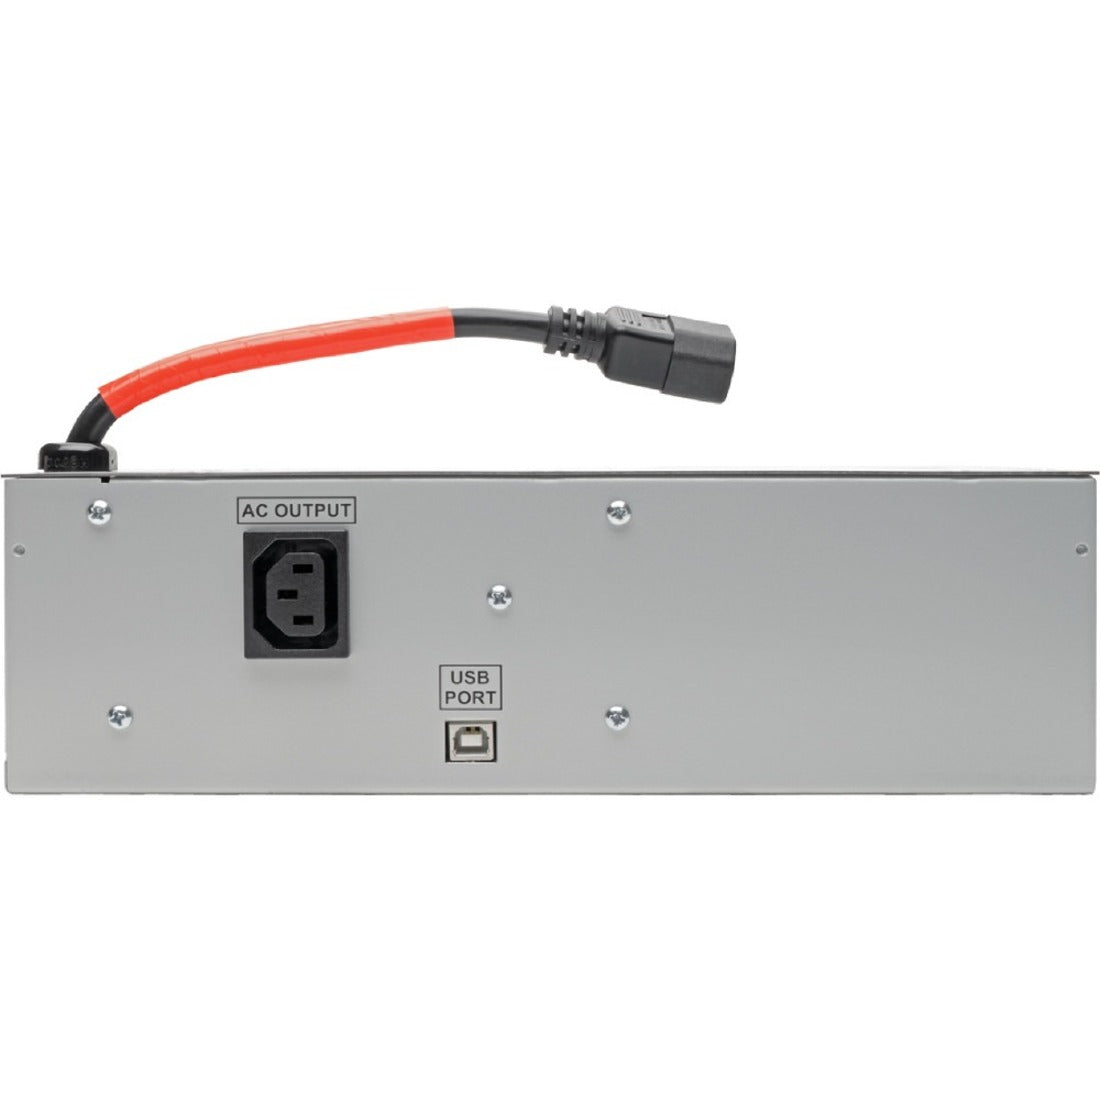 Tripp Lite HCINT350SNR 350W Power Inverter/Charger for Mobile Medical Equipment, 230V - IEC 60601-1